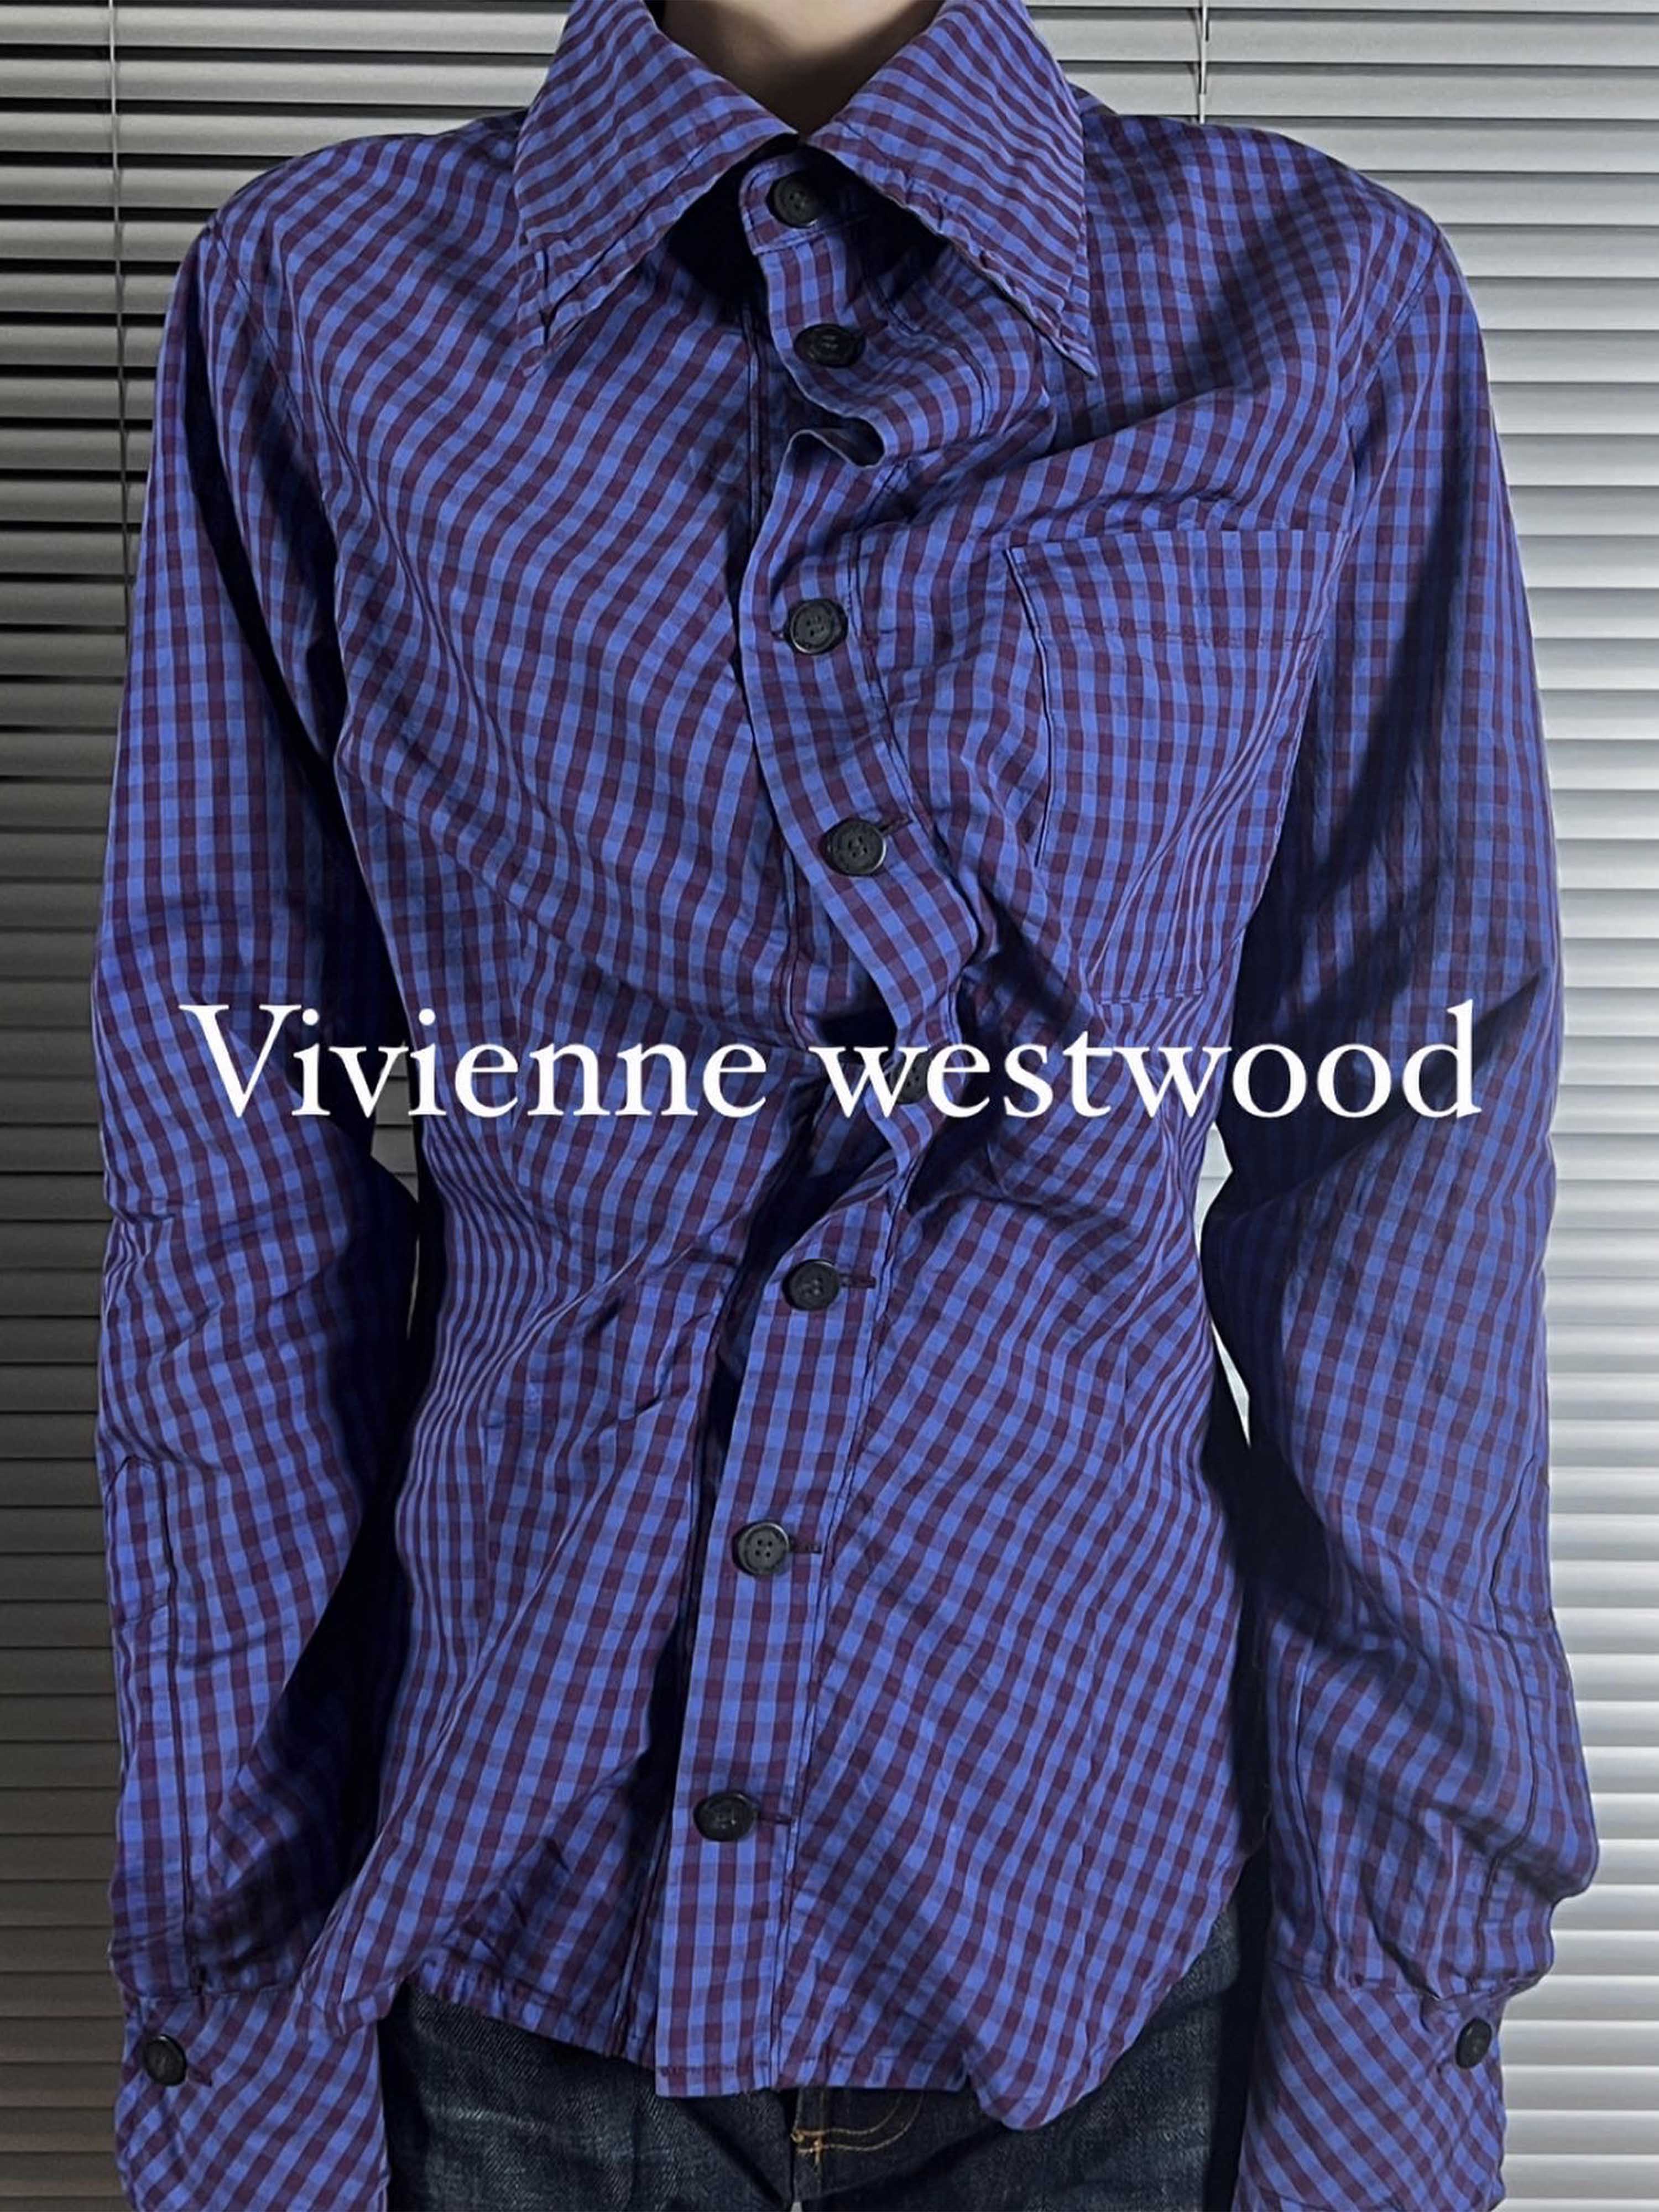 Vivienne westwood shirts